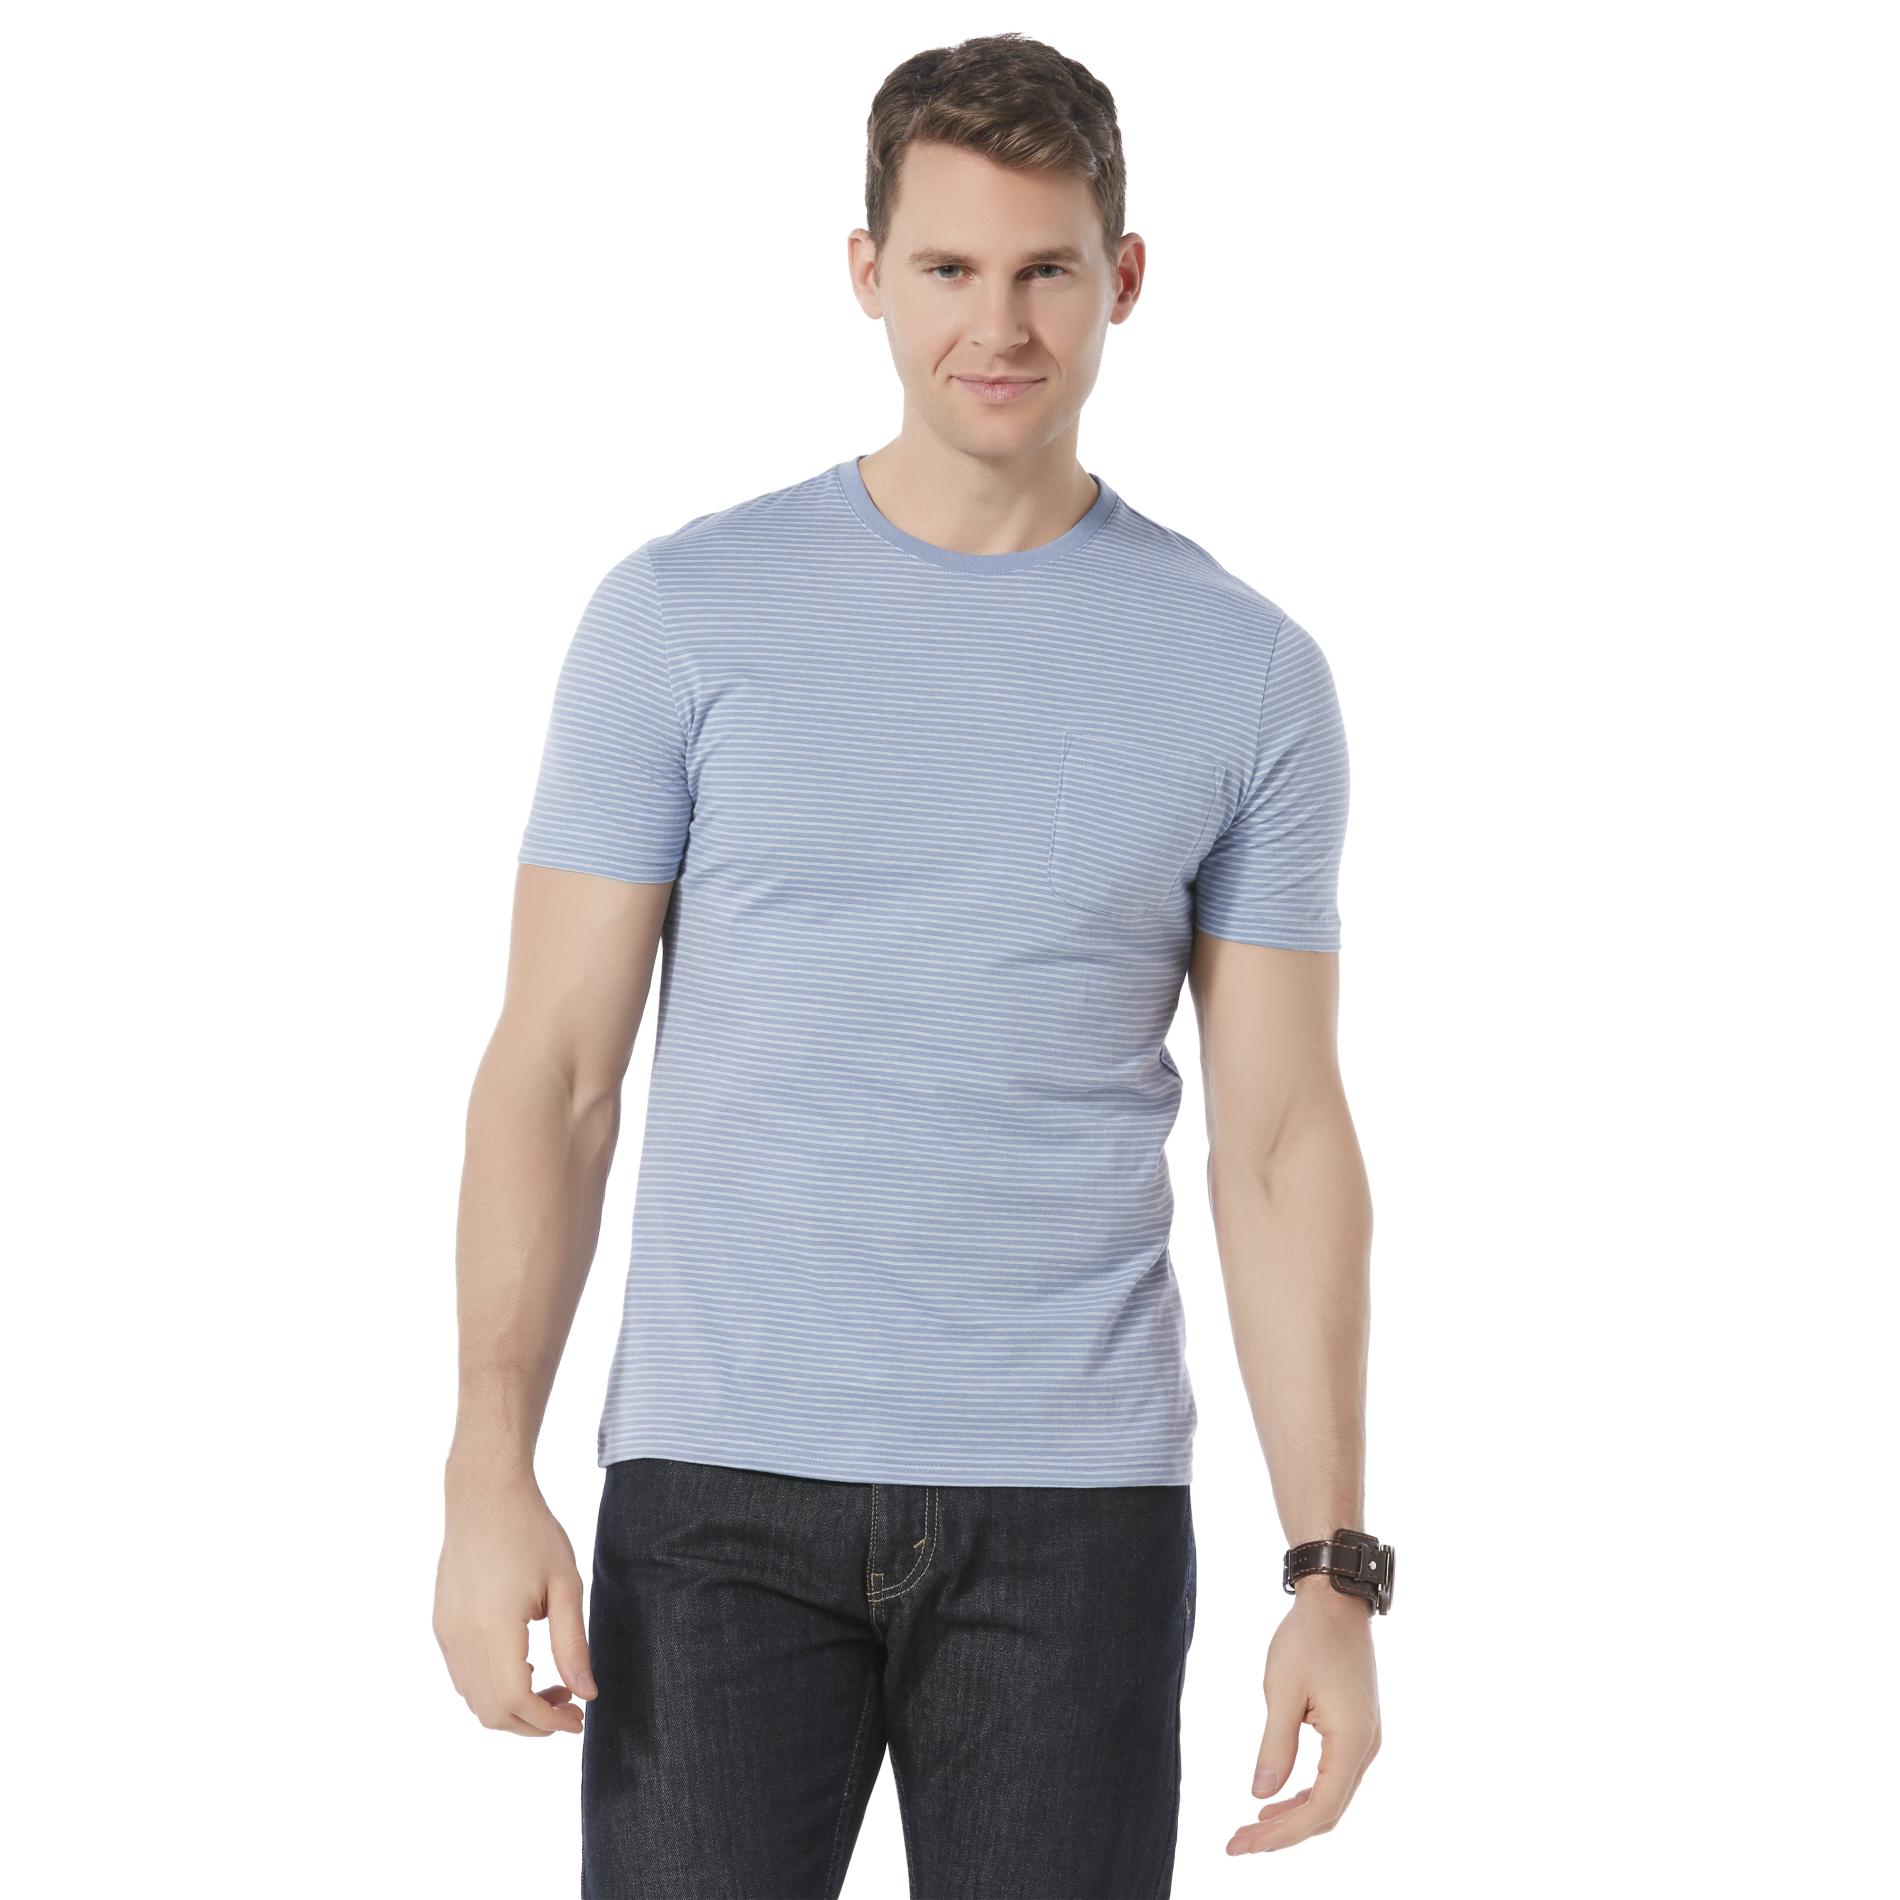 Structure Men's Pocket T-Shirt - Striped